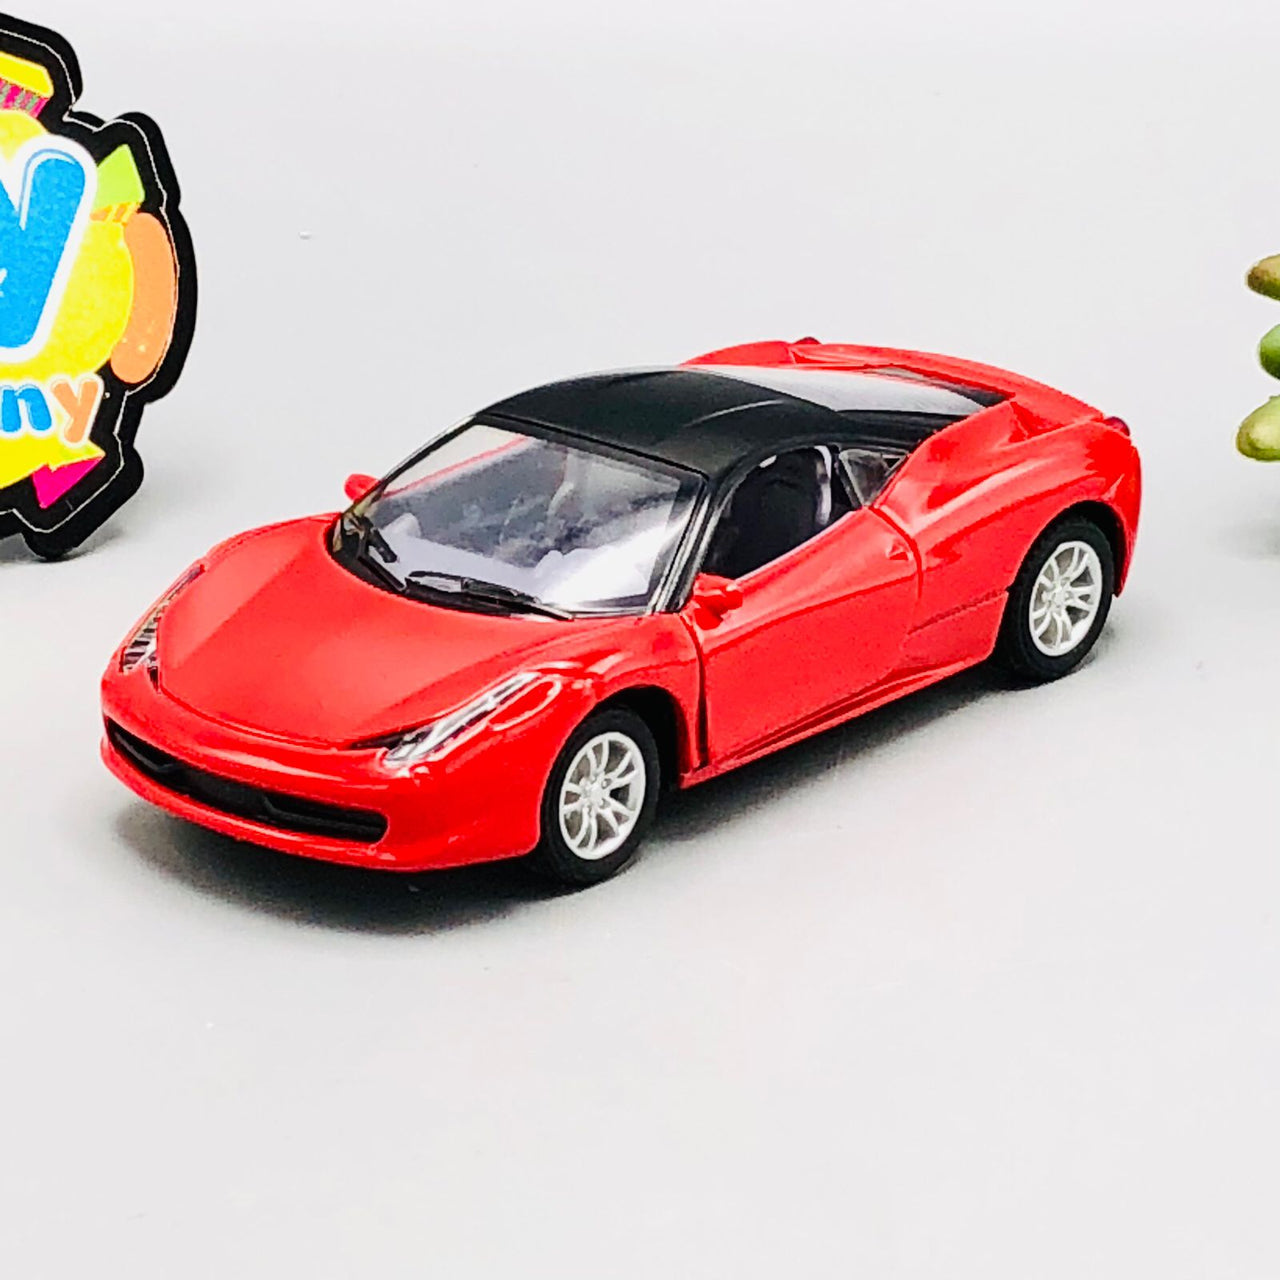 Diecast Pullback Miniature Model Car - Assortment